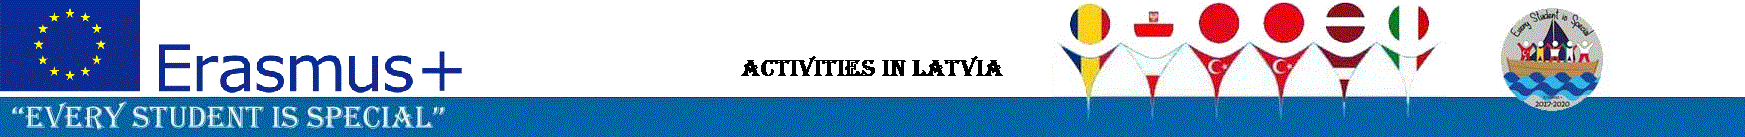 Activities in Latvia